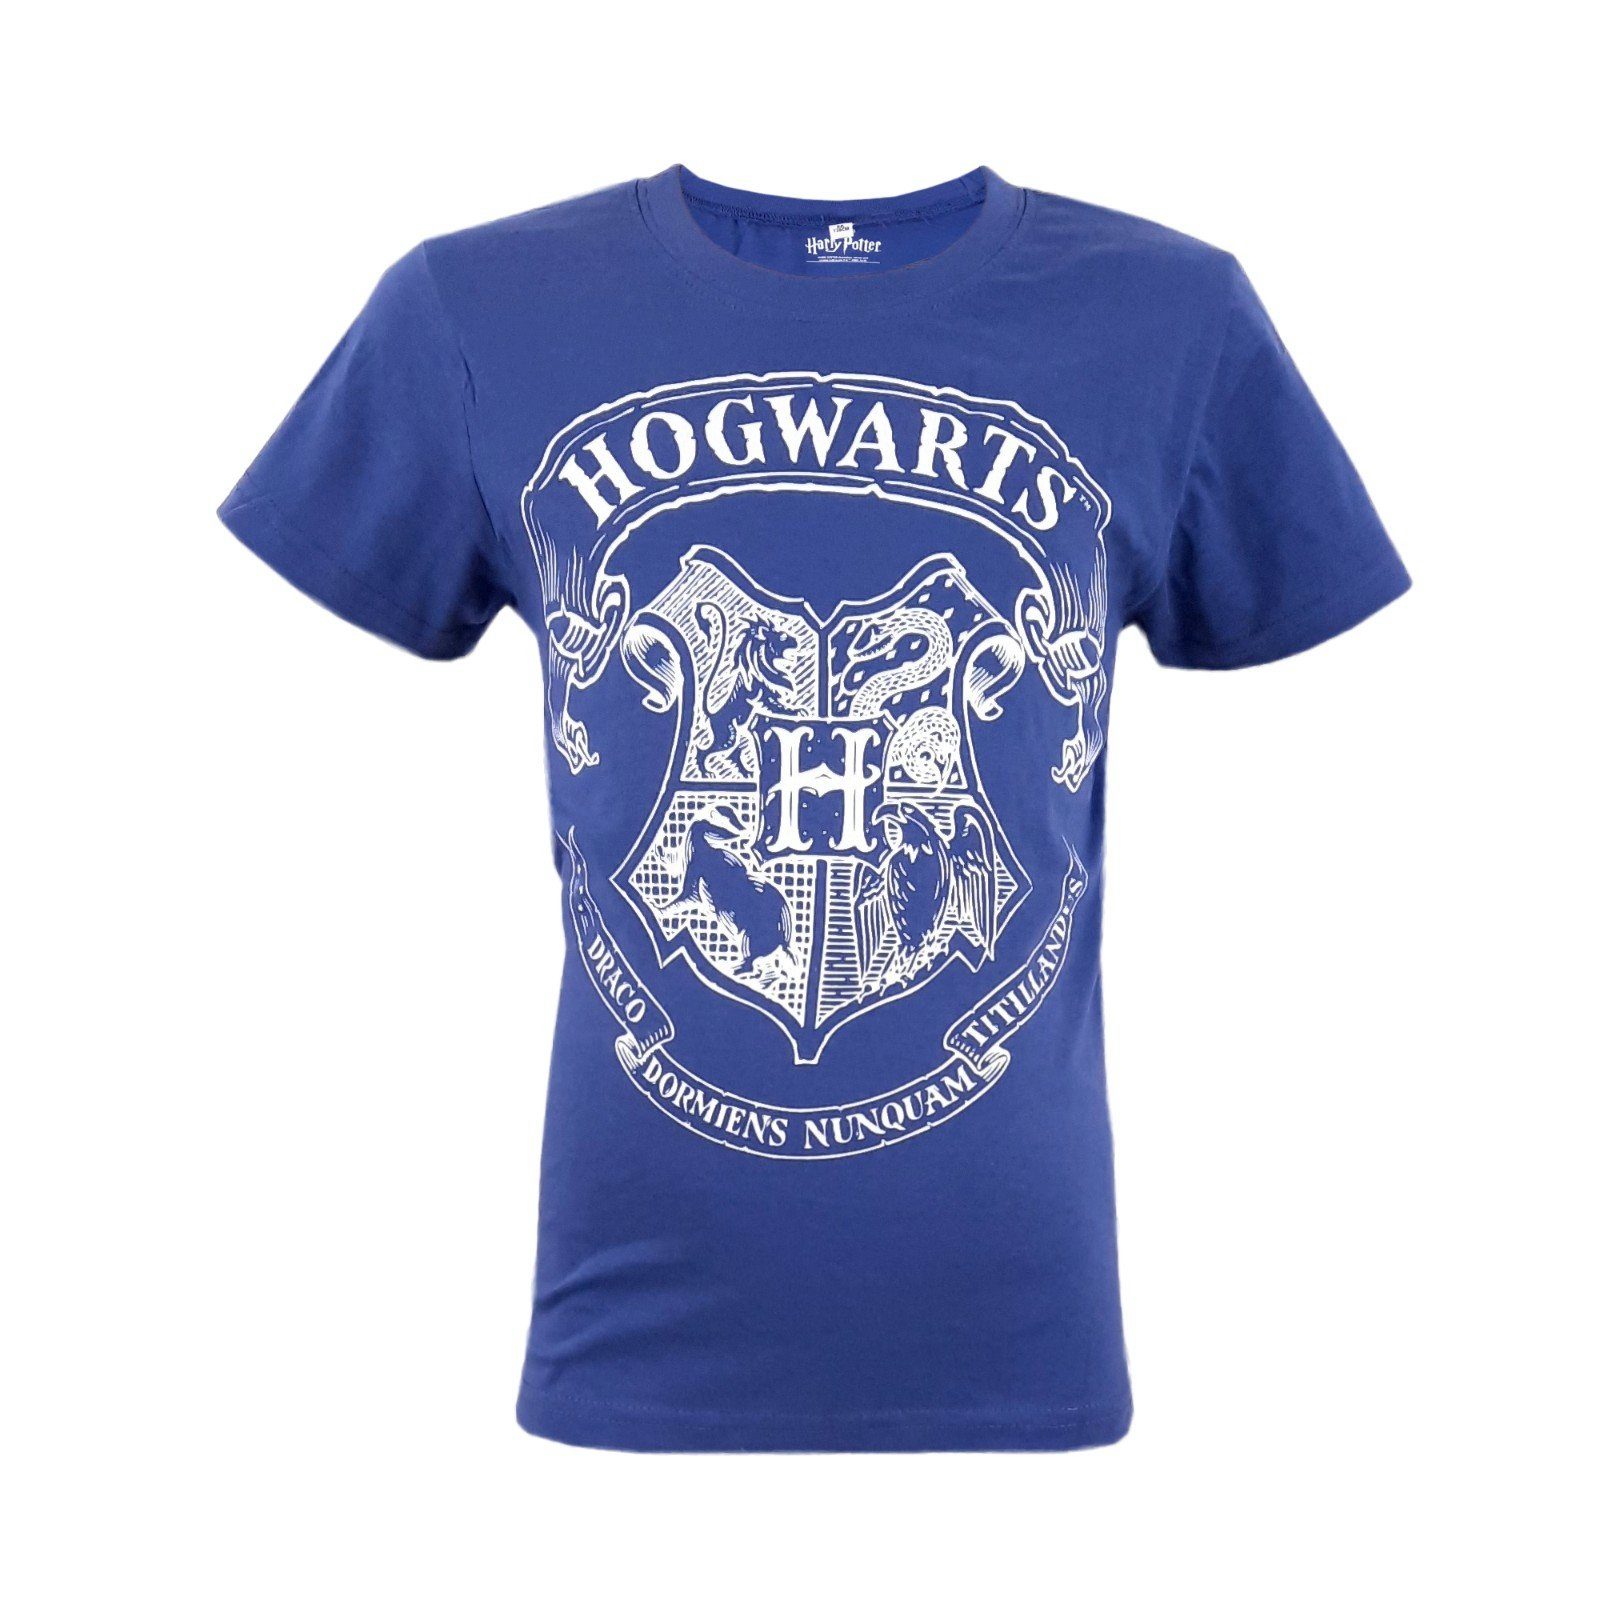 Harry Potter T-Shirt Harry Potter Hogwarts Kinder kurzarm Shirt Gr. 110 bis 128, 100% Baumwolle